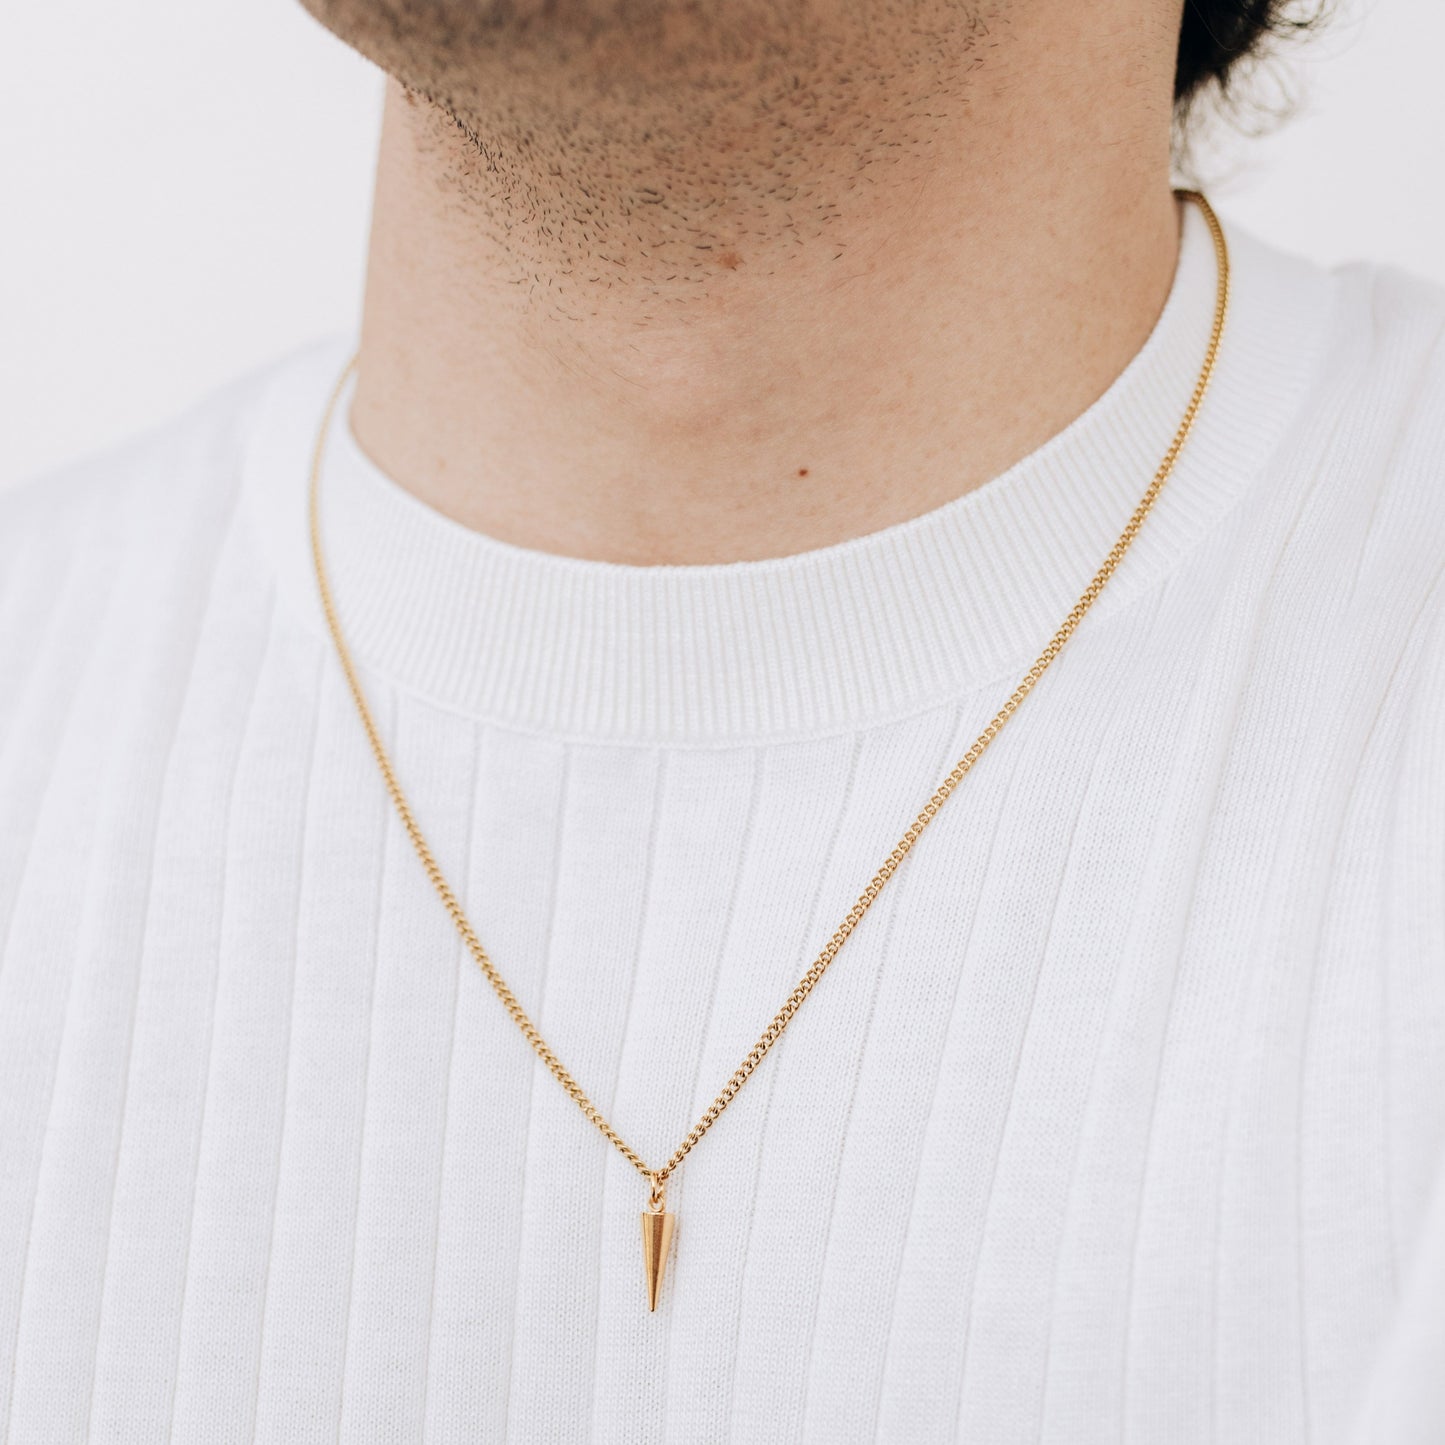 Gold Spike Pendant Necklace For Men or Women - Necklace - Boutique Wear RENN